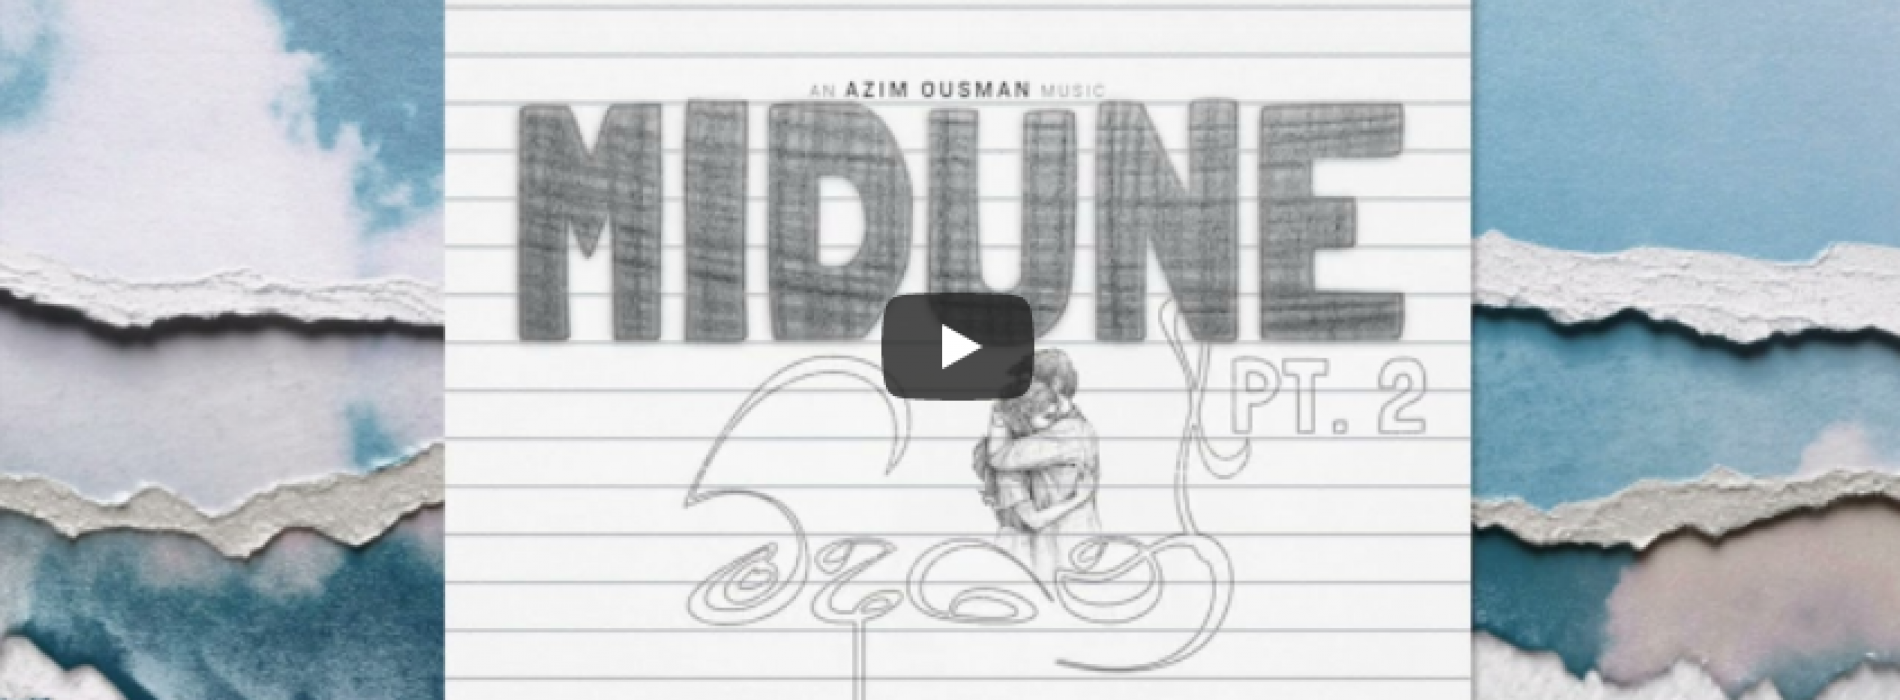 New Music : Azim Ousman & Didula Tharusara – Midune, Pt. 2 (Audio)